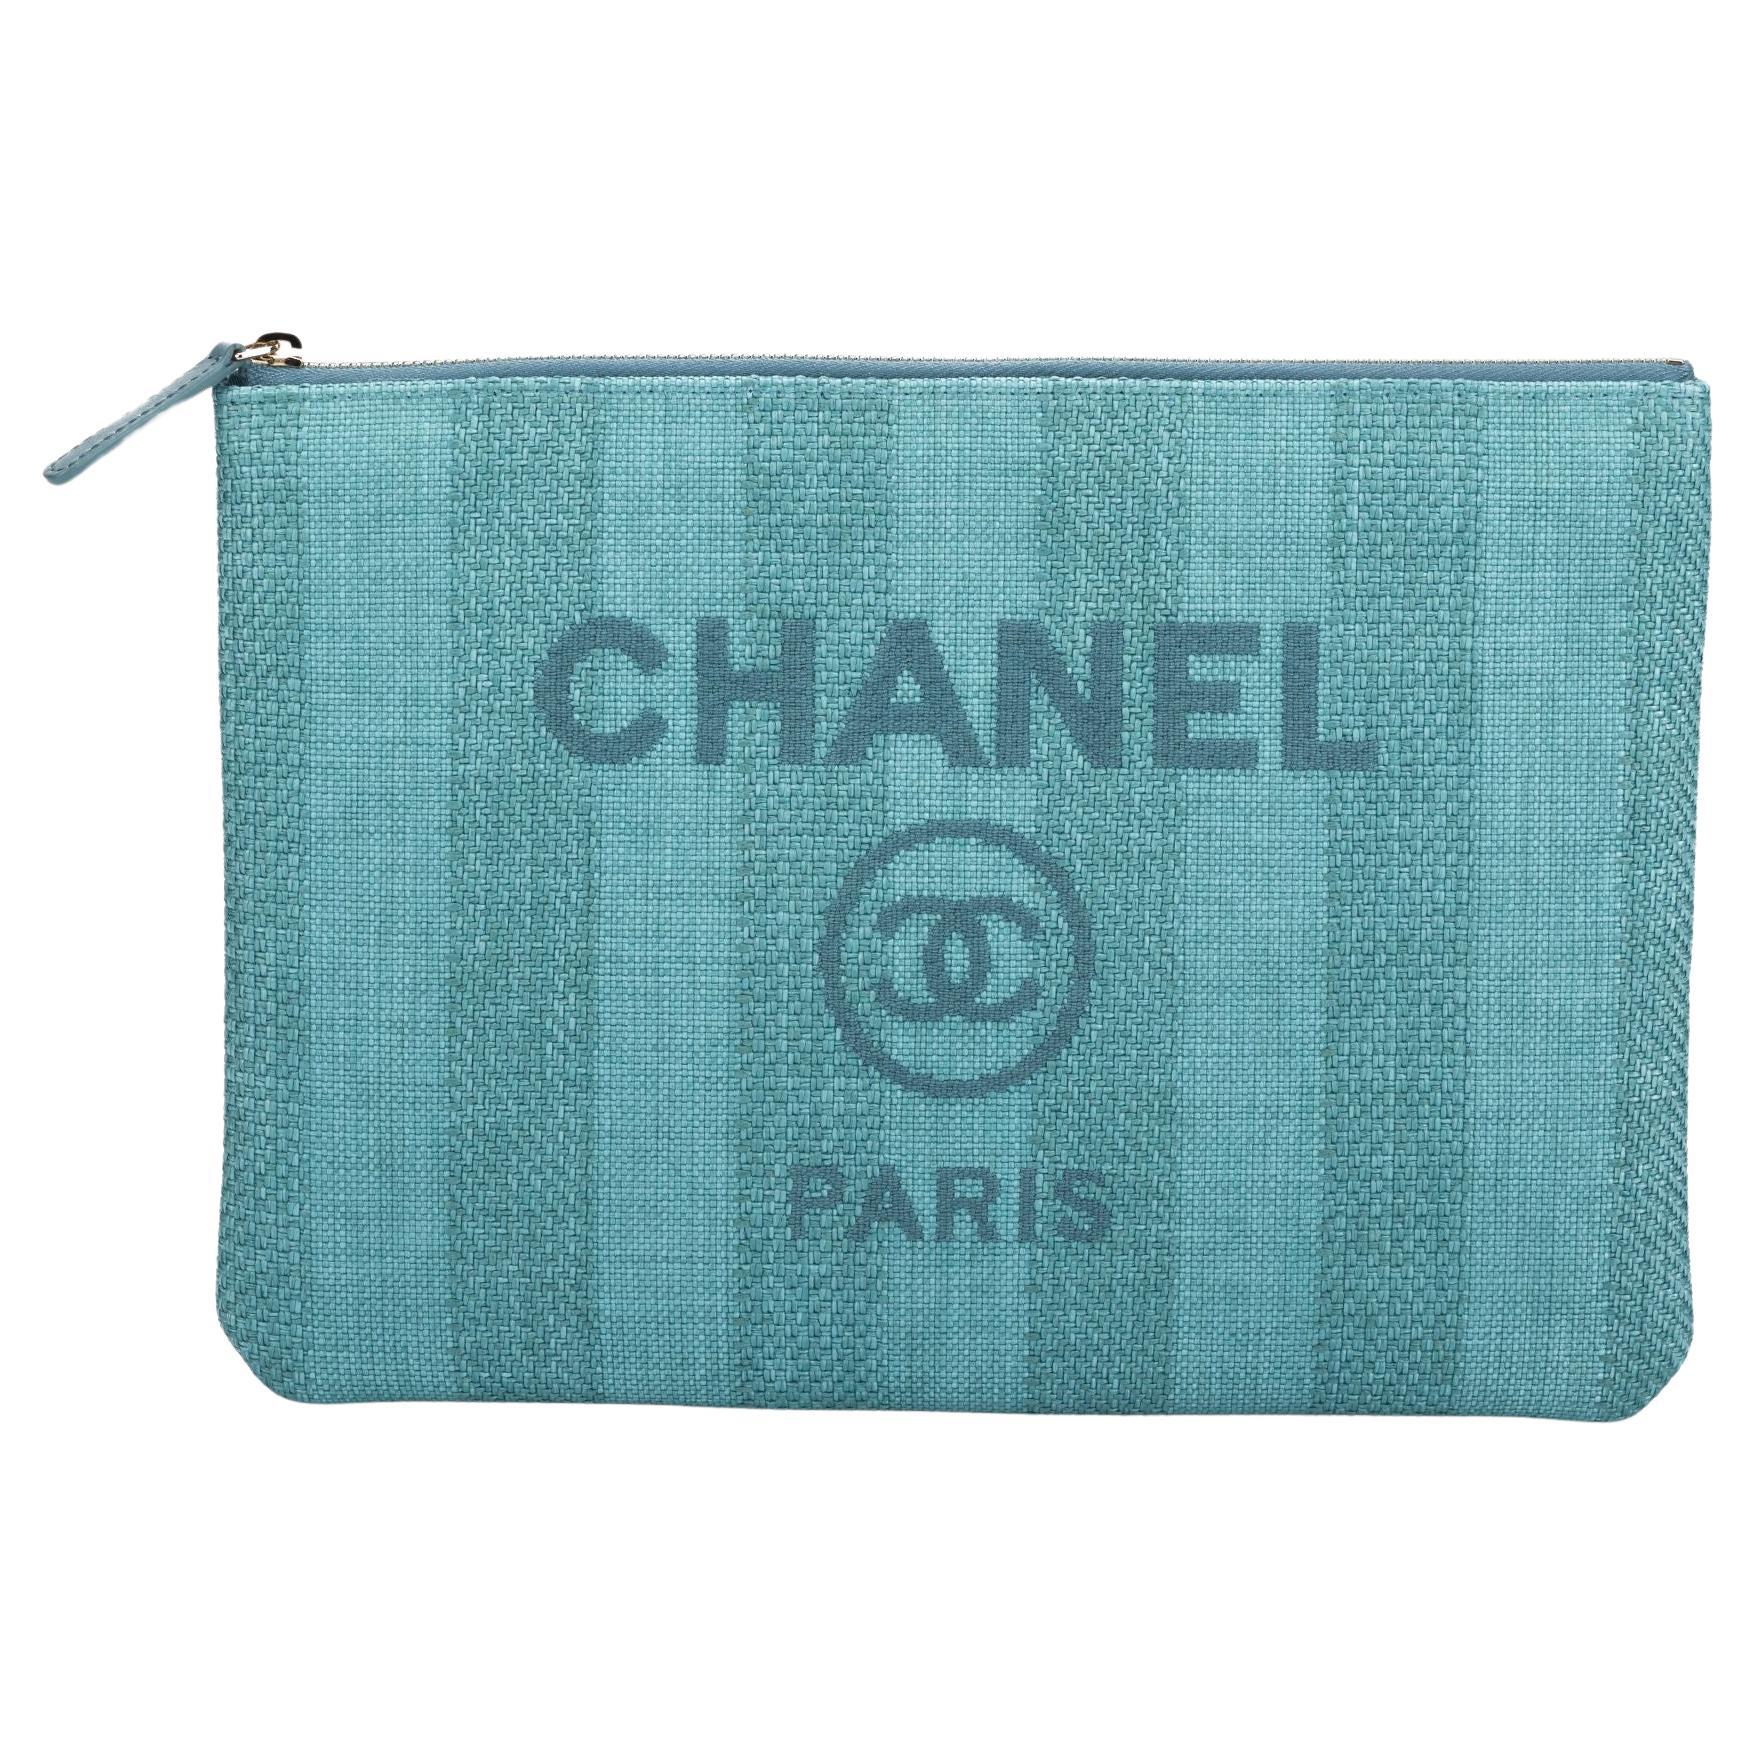 Chanel New Striped Deauville Aqua Clutch For Sale